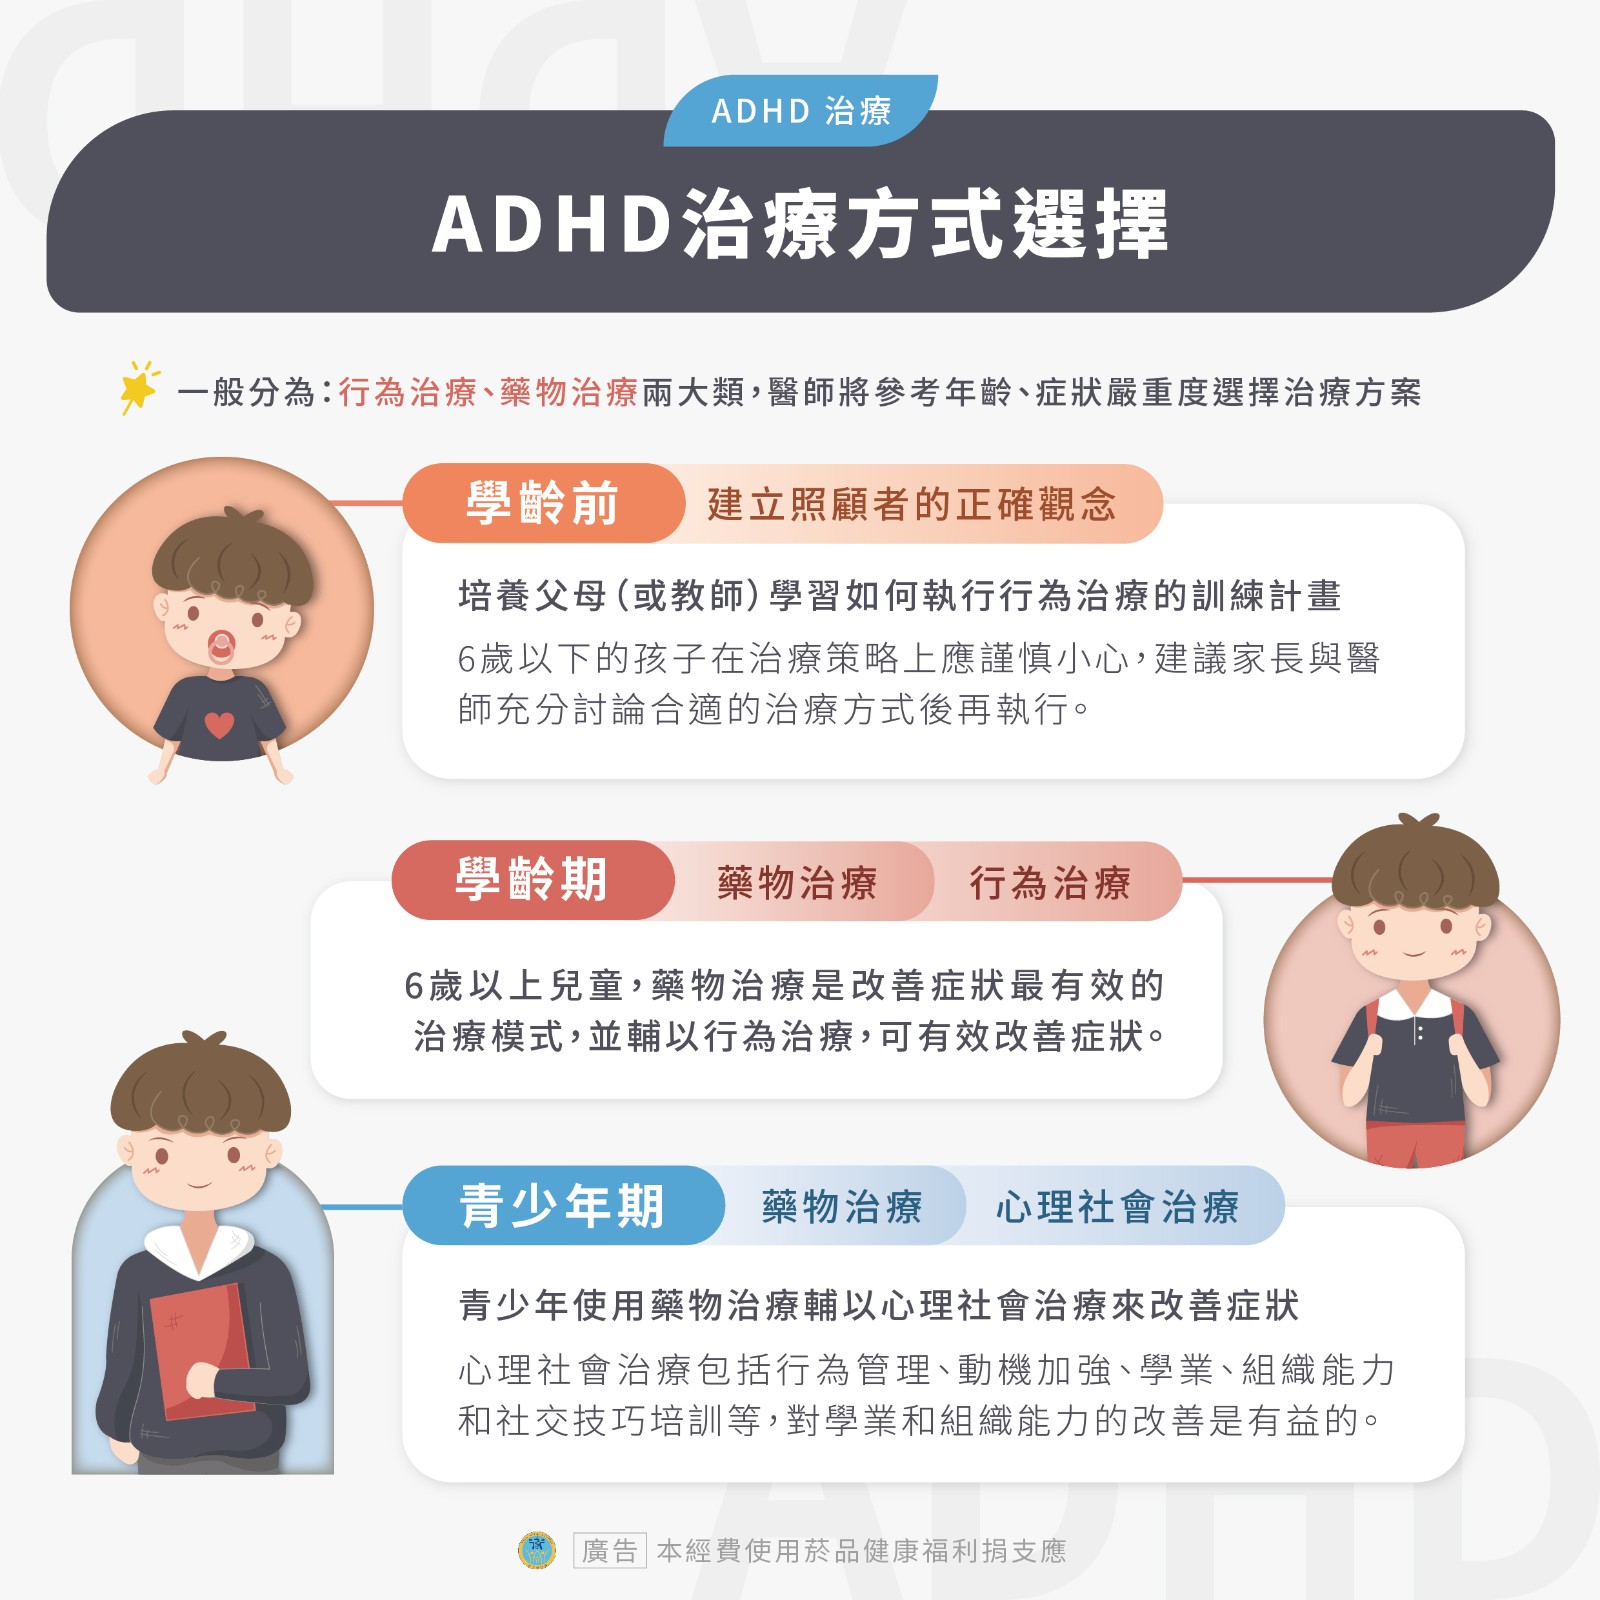 ADHD衛教懶人包圖卡04.jpg